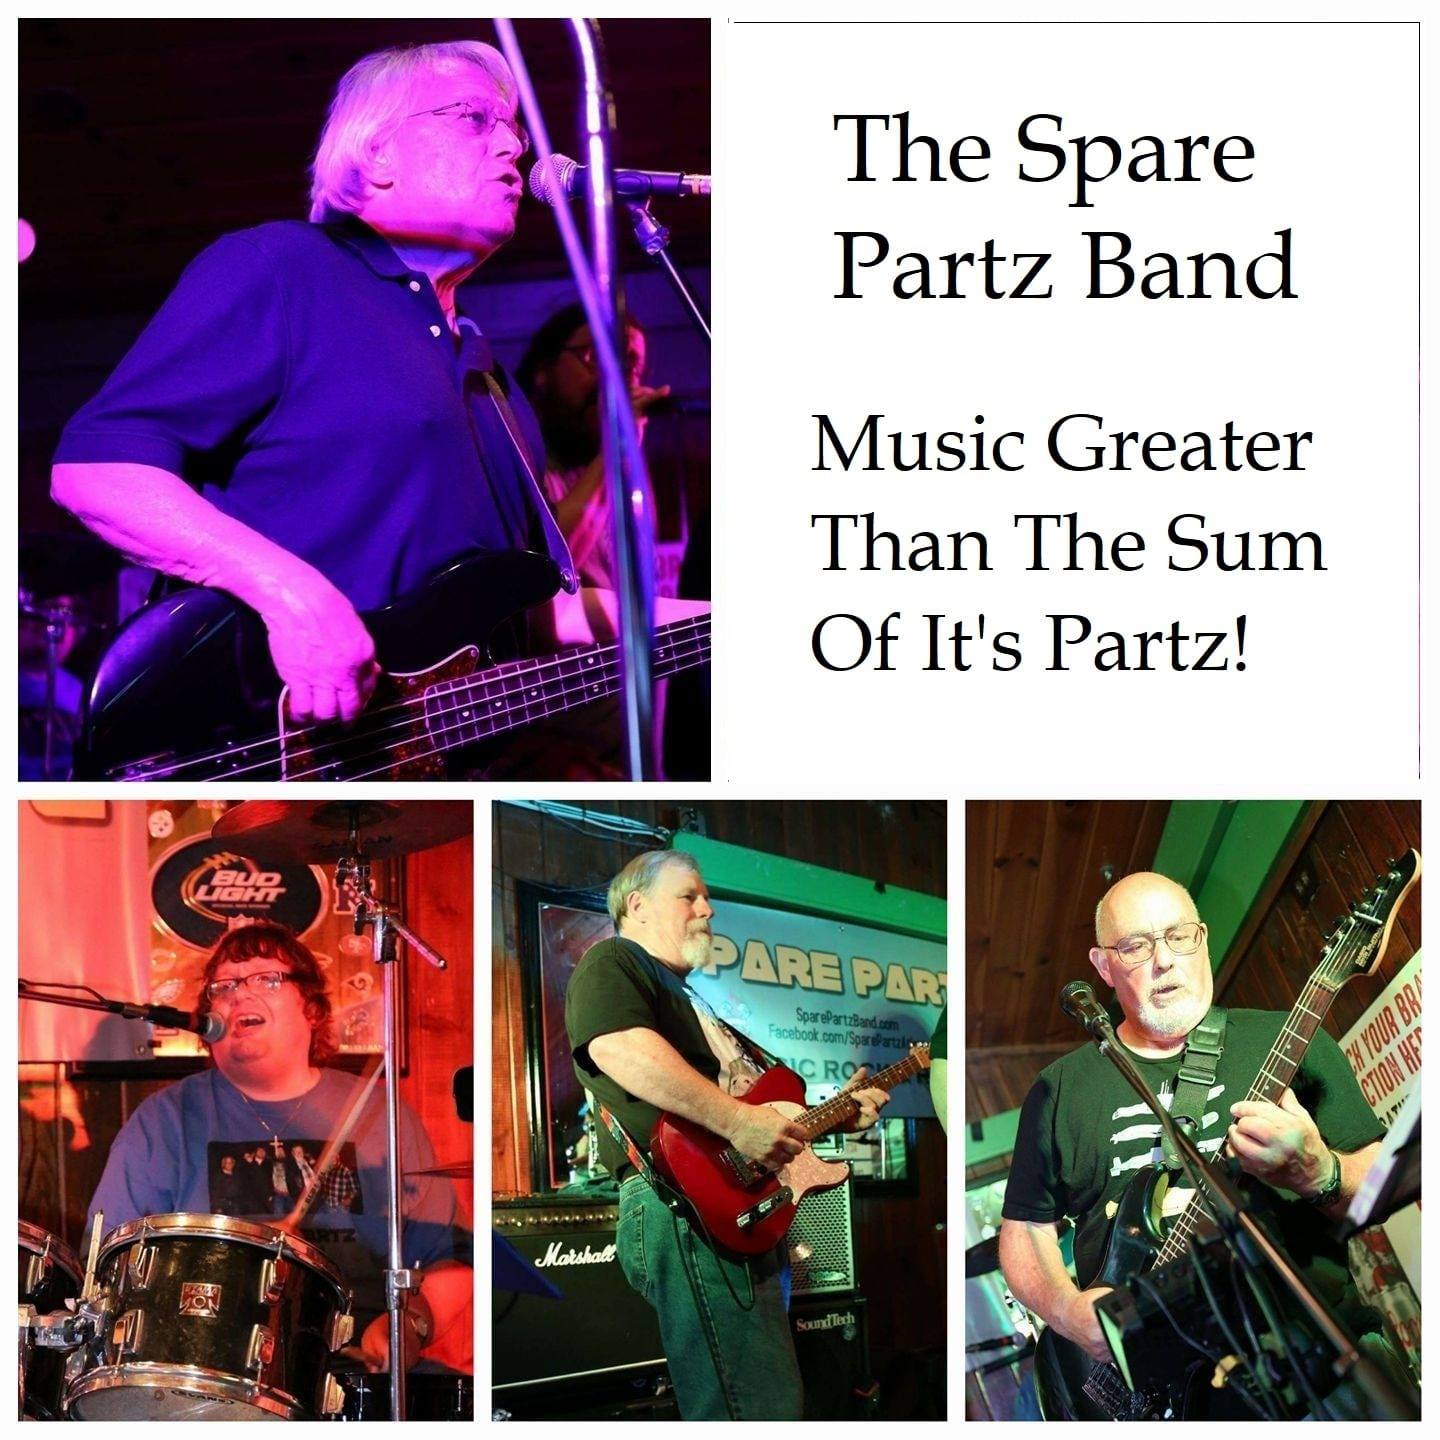 The Spare Partz Band promo image